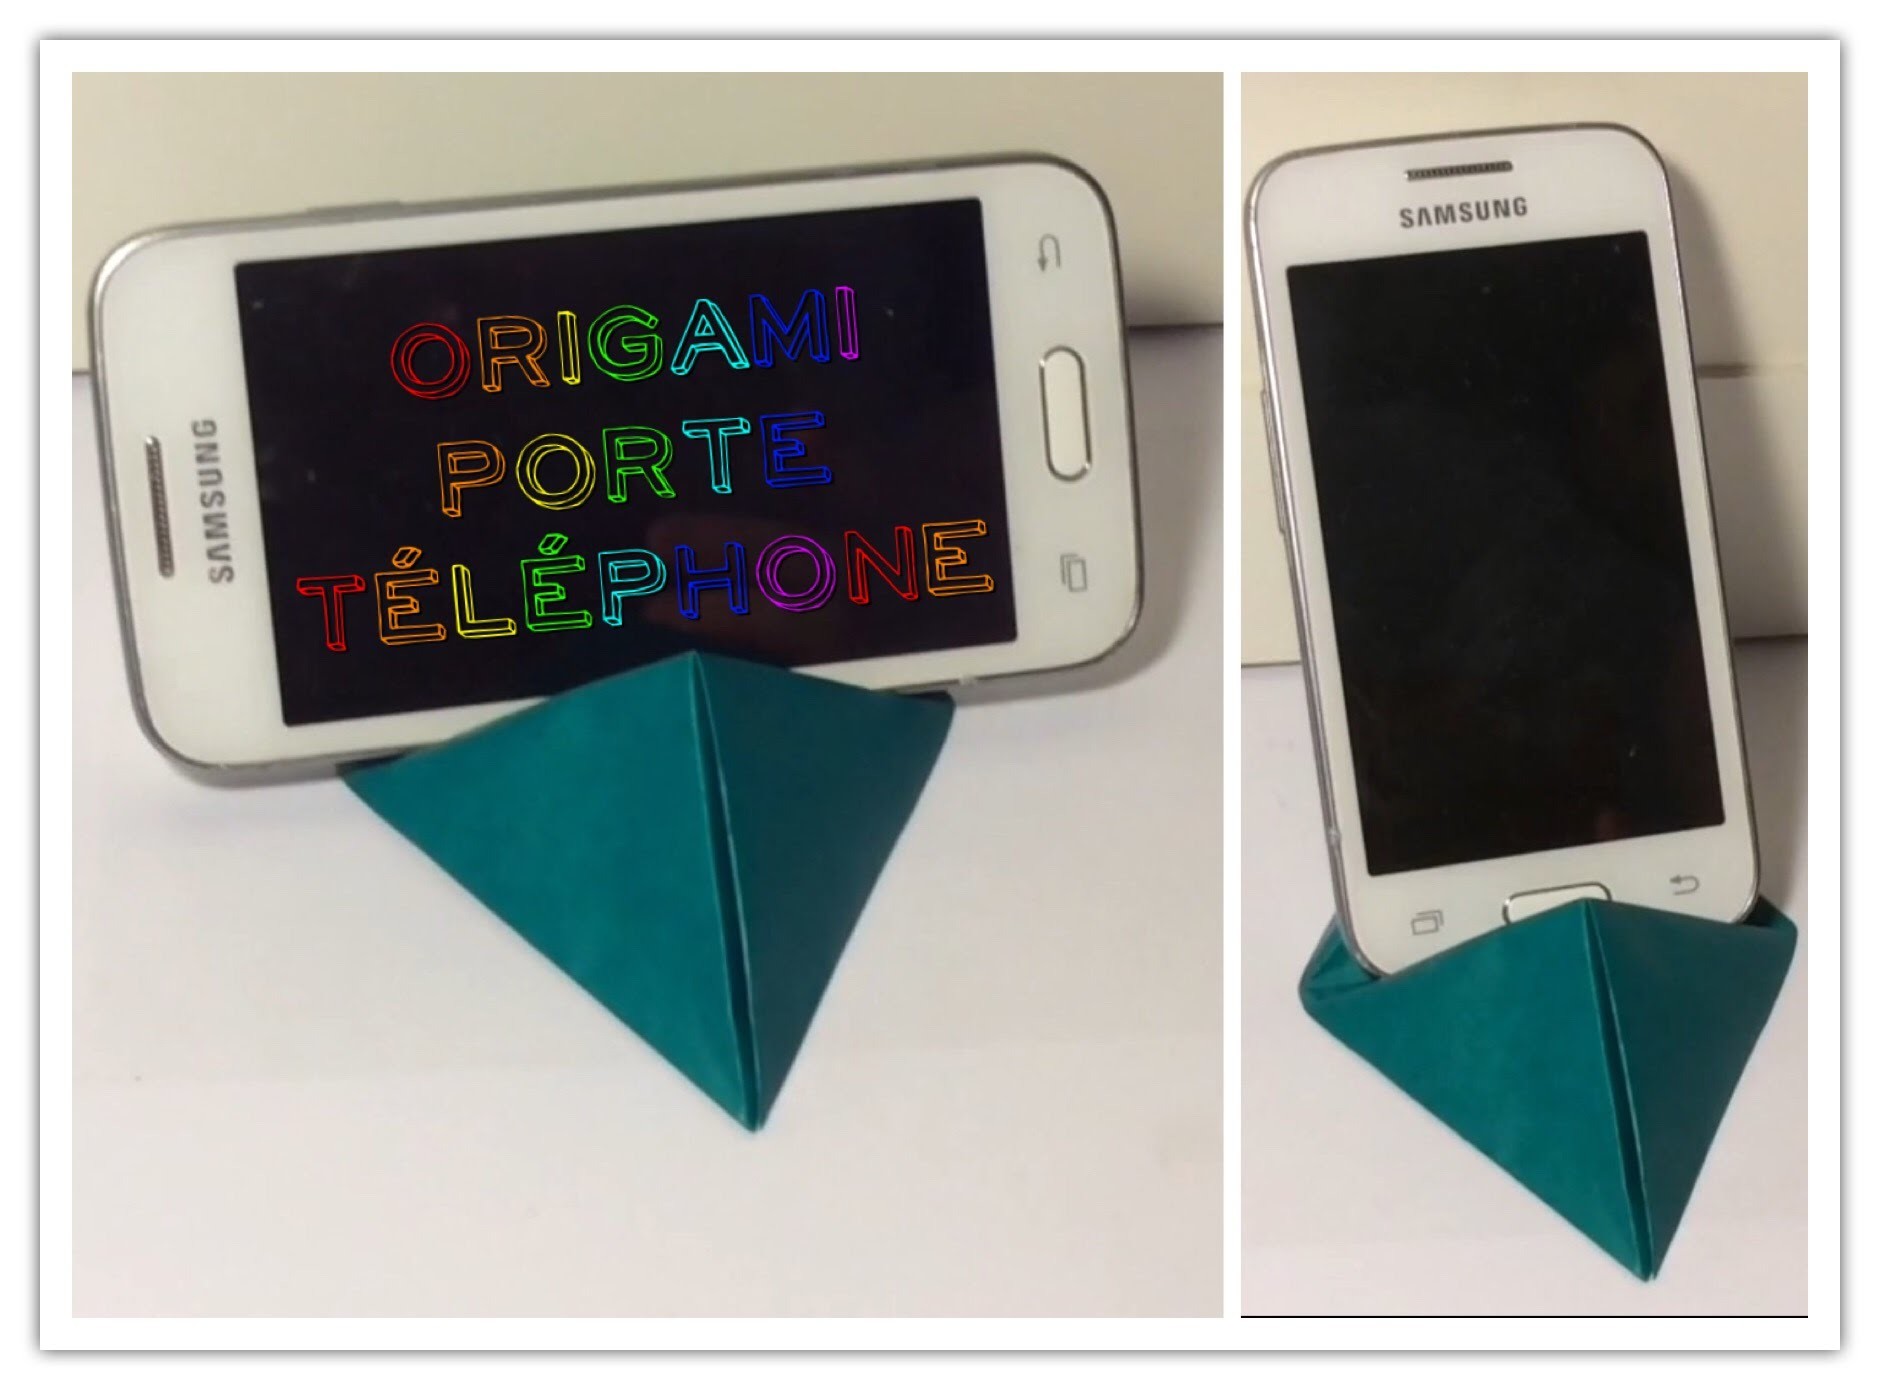 ORIGAMI PORTE TÉLÉPHONE. SUPPORT PHONE (modèle traditionnel - traditional model)